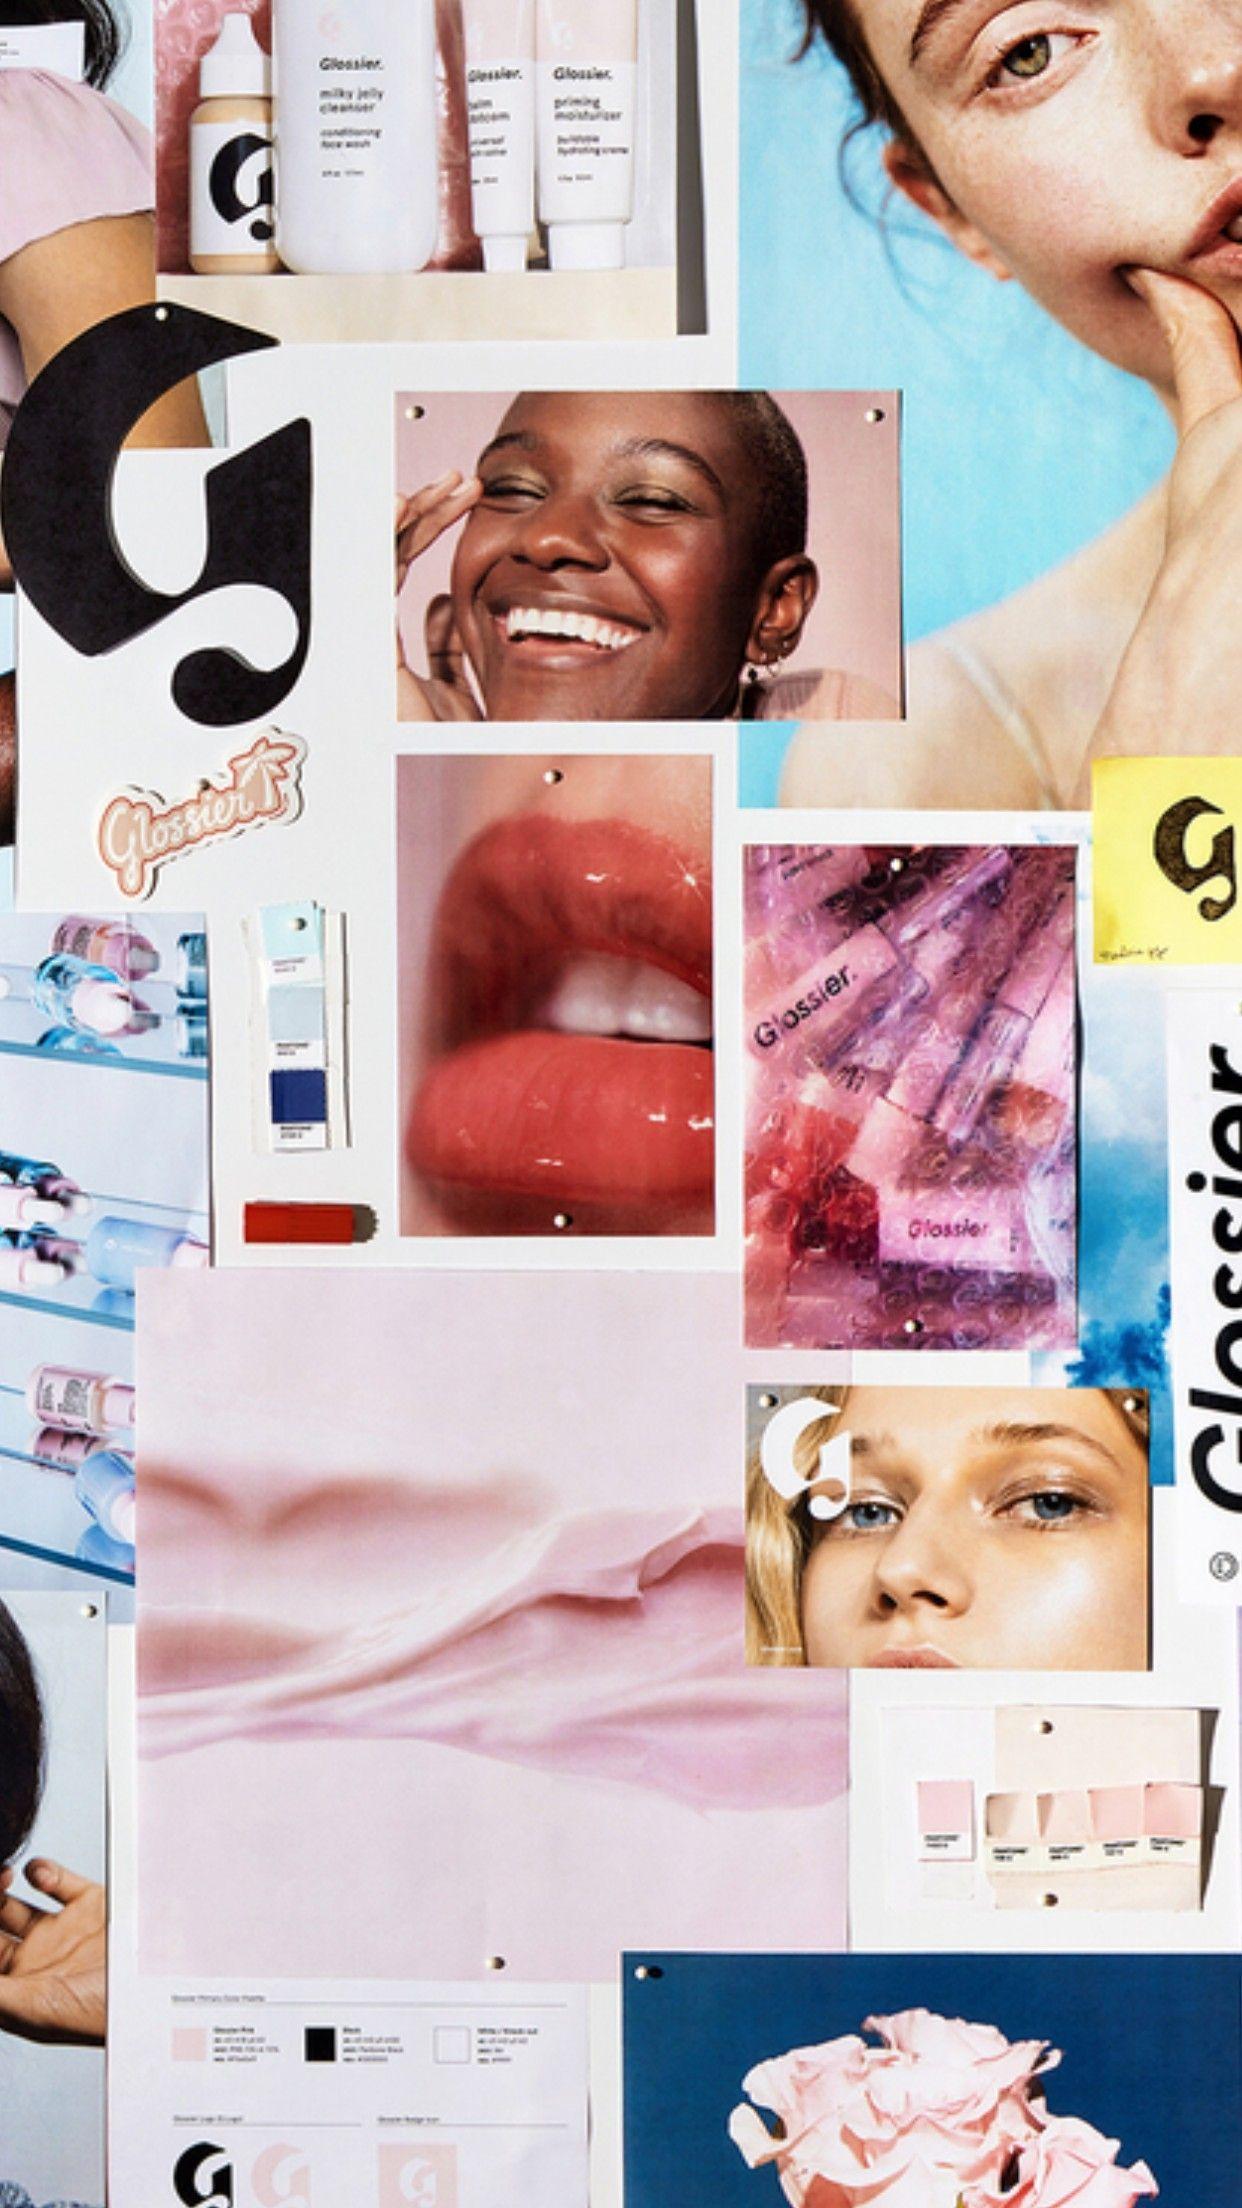 makeup collage wallpaper desktop